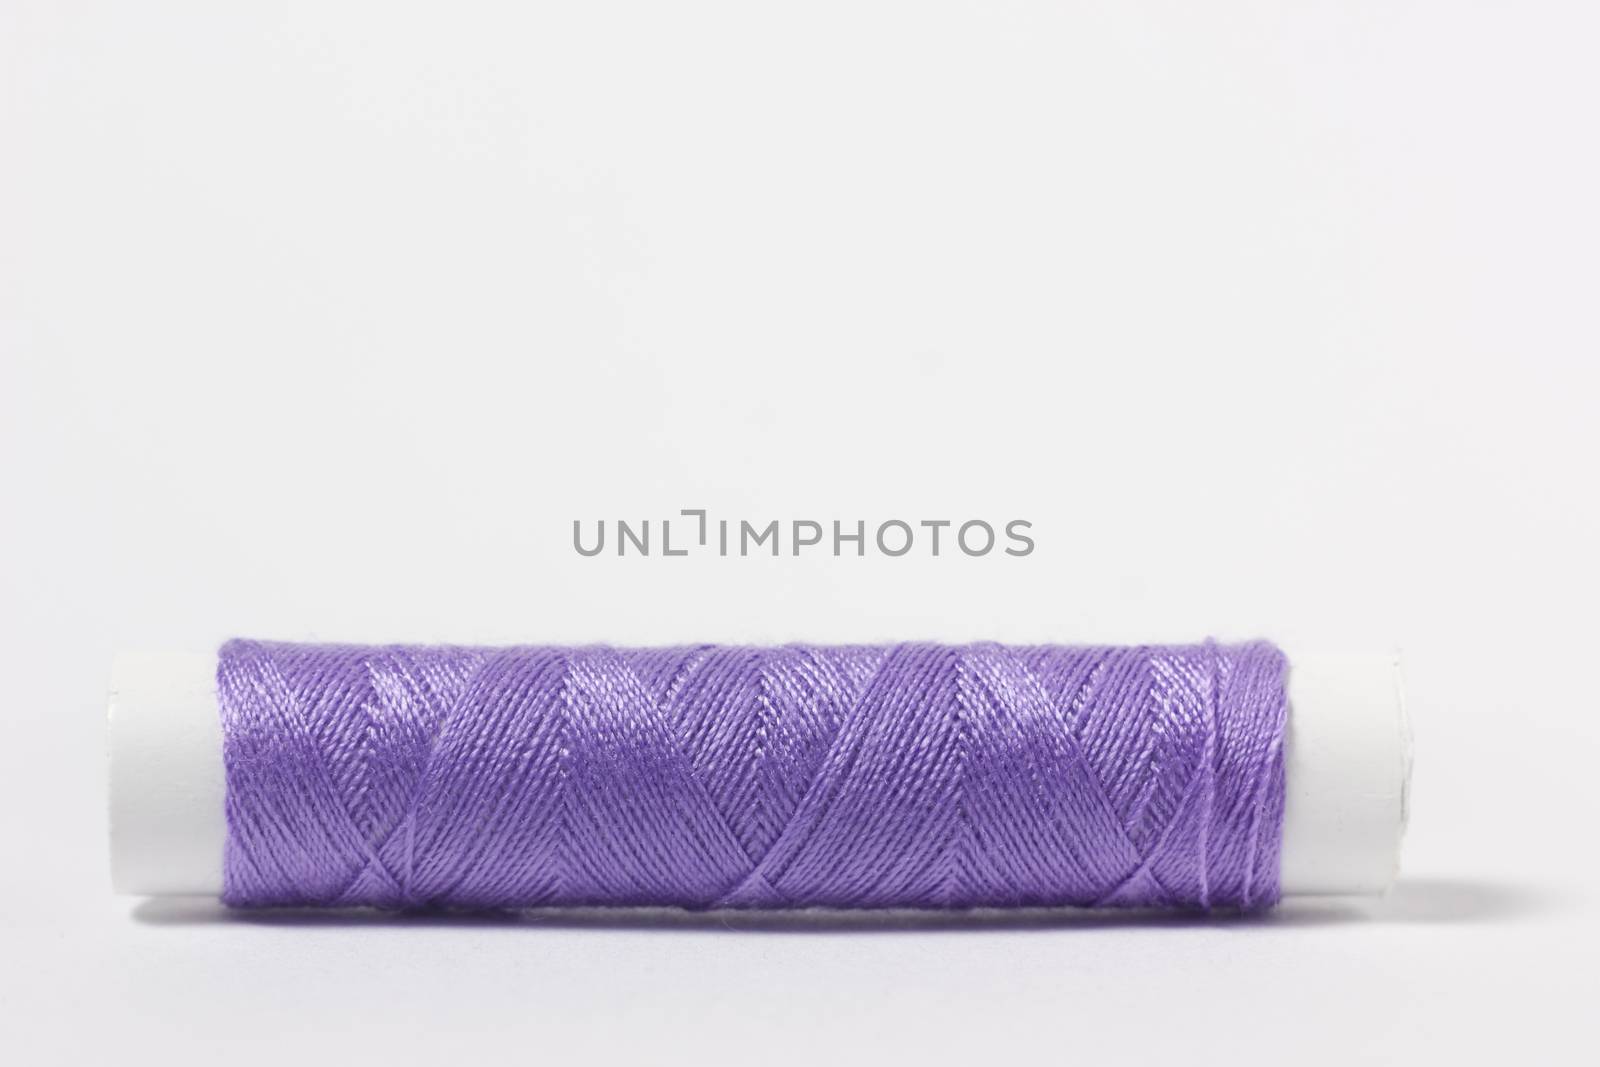 Cotton fabric purple on white background